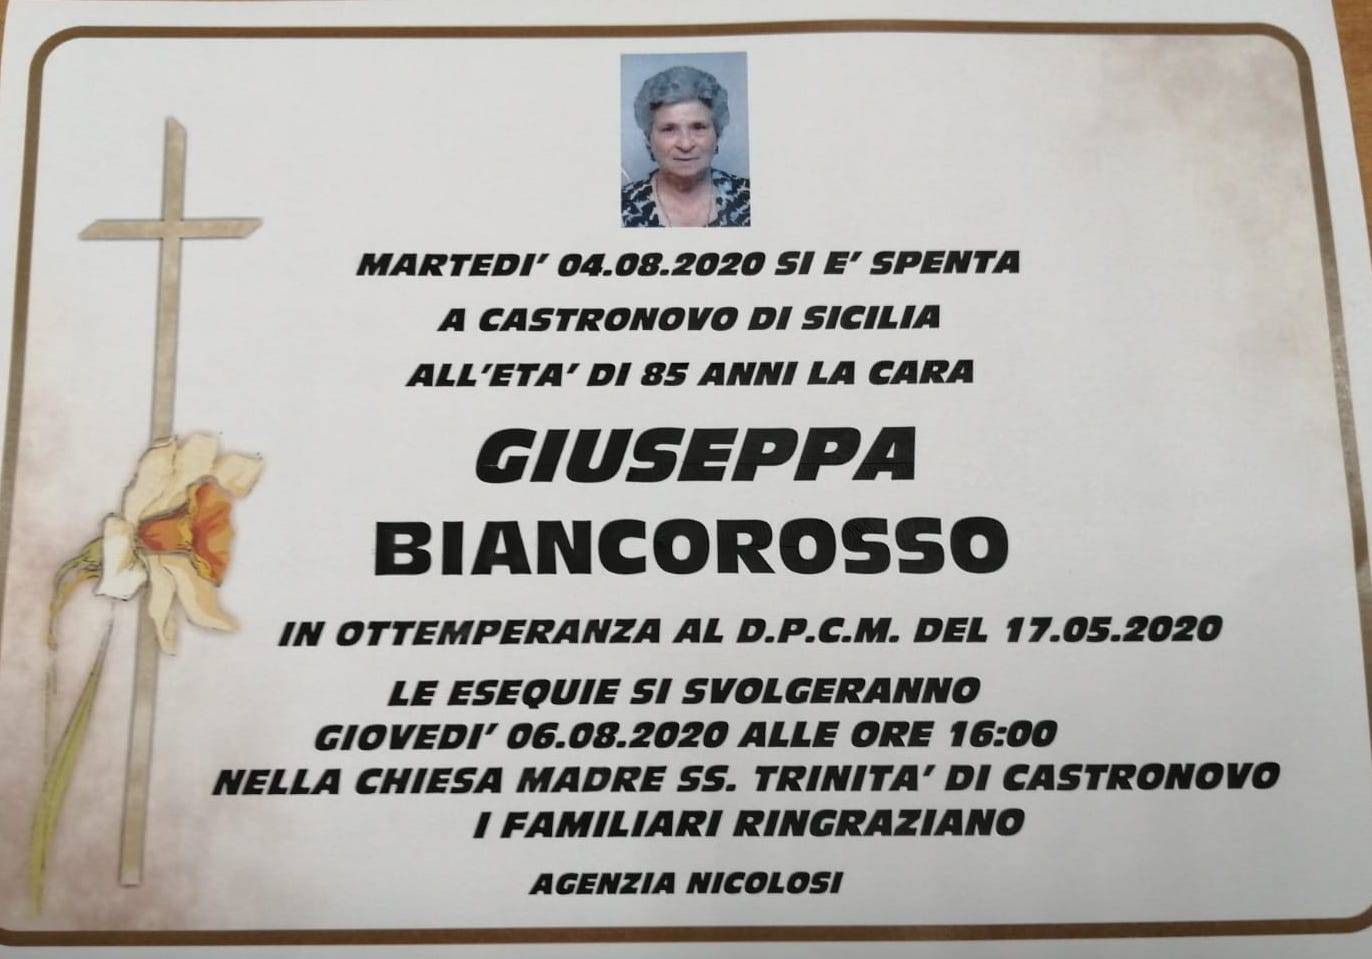 Giuseppa Biancorosso